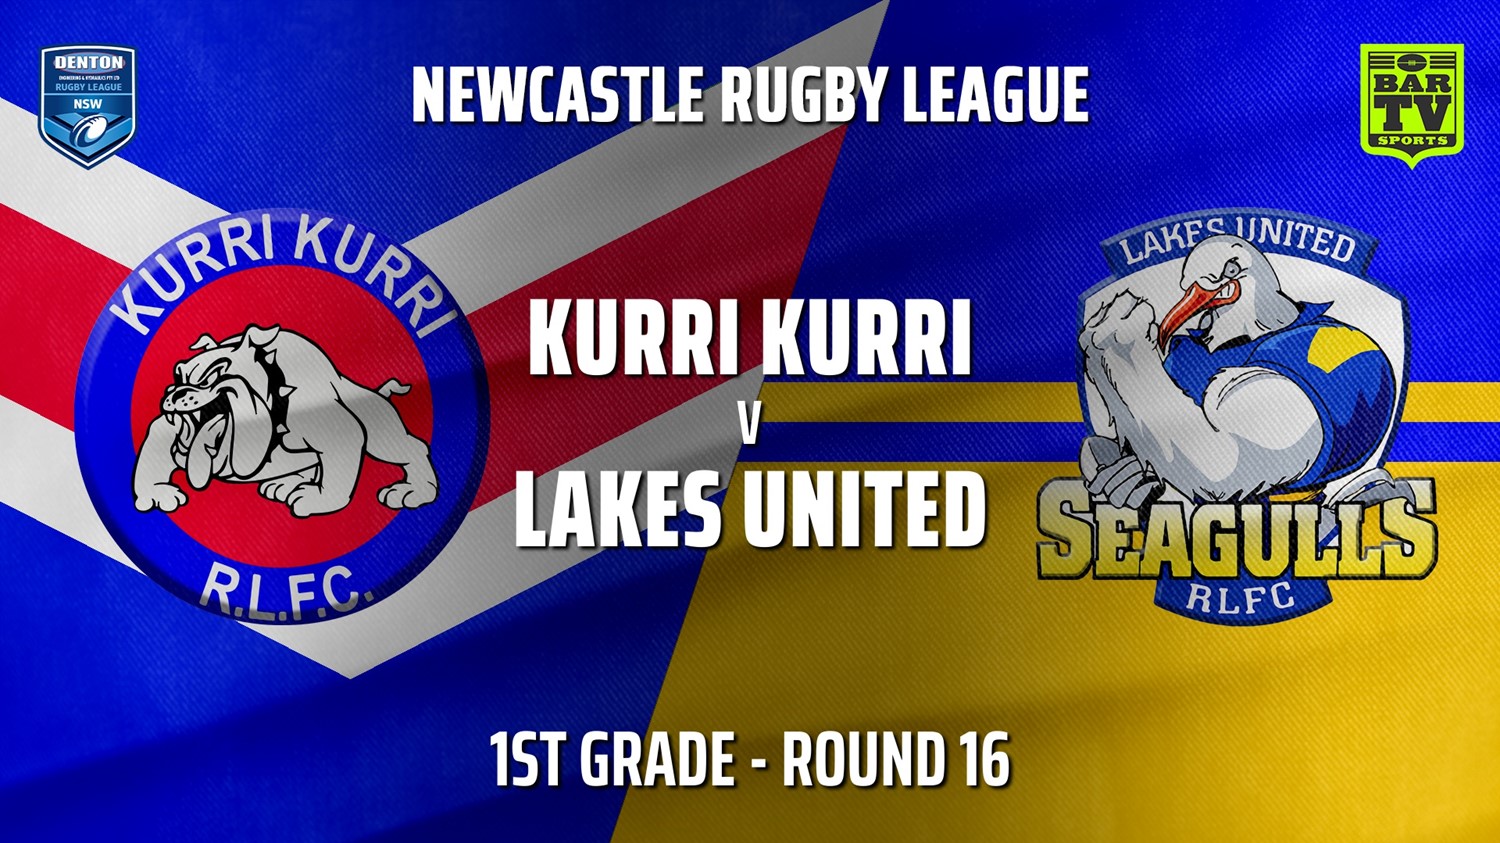 210724-Newcastle Round 16 - 1st Grade - Kurri Kurri Bulldogs v Lakes United Minigame Slate Image